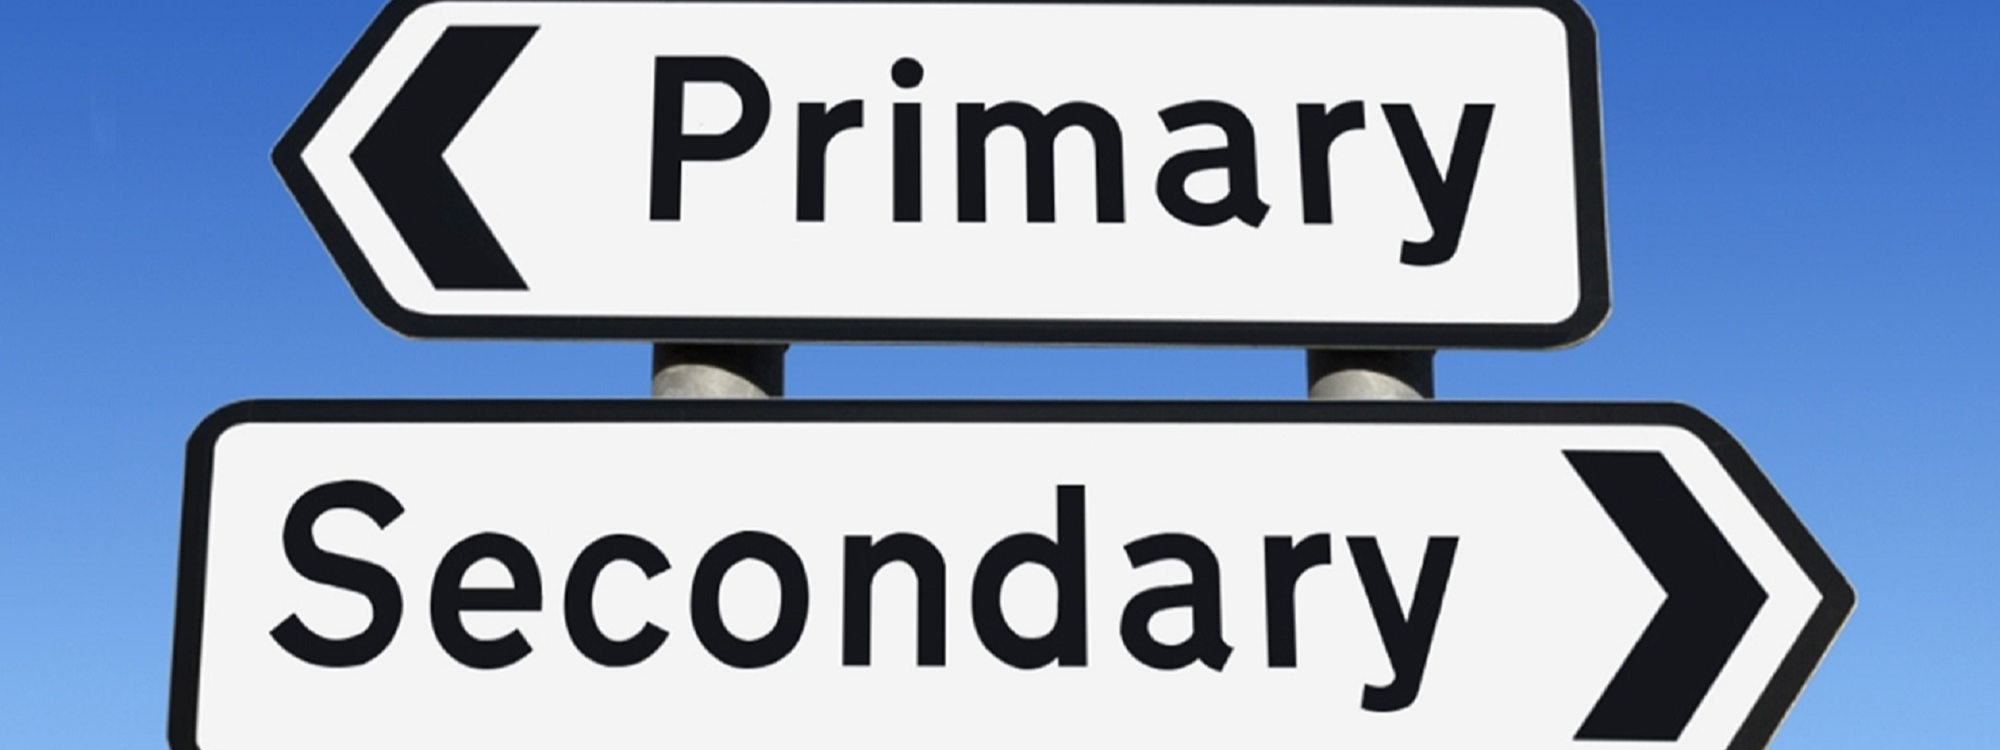 Primary to secondary.jpg1